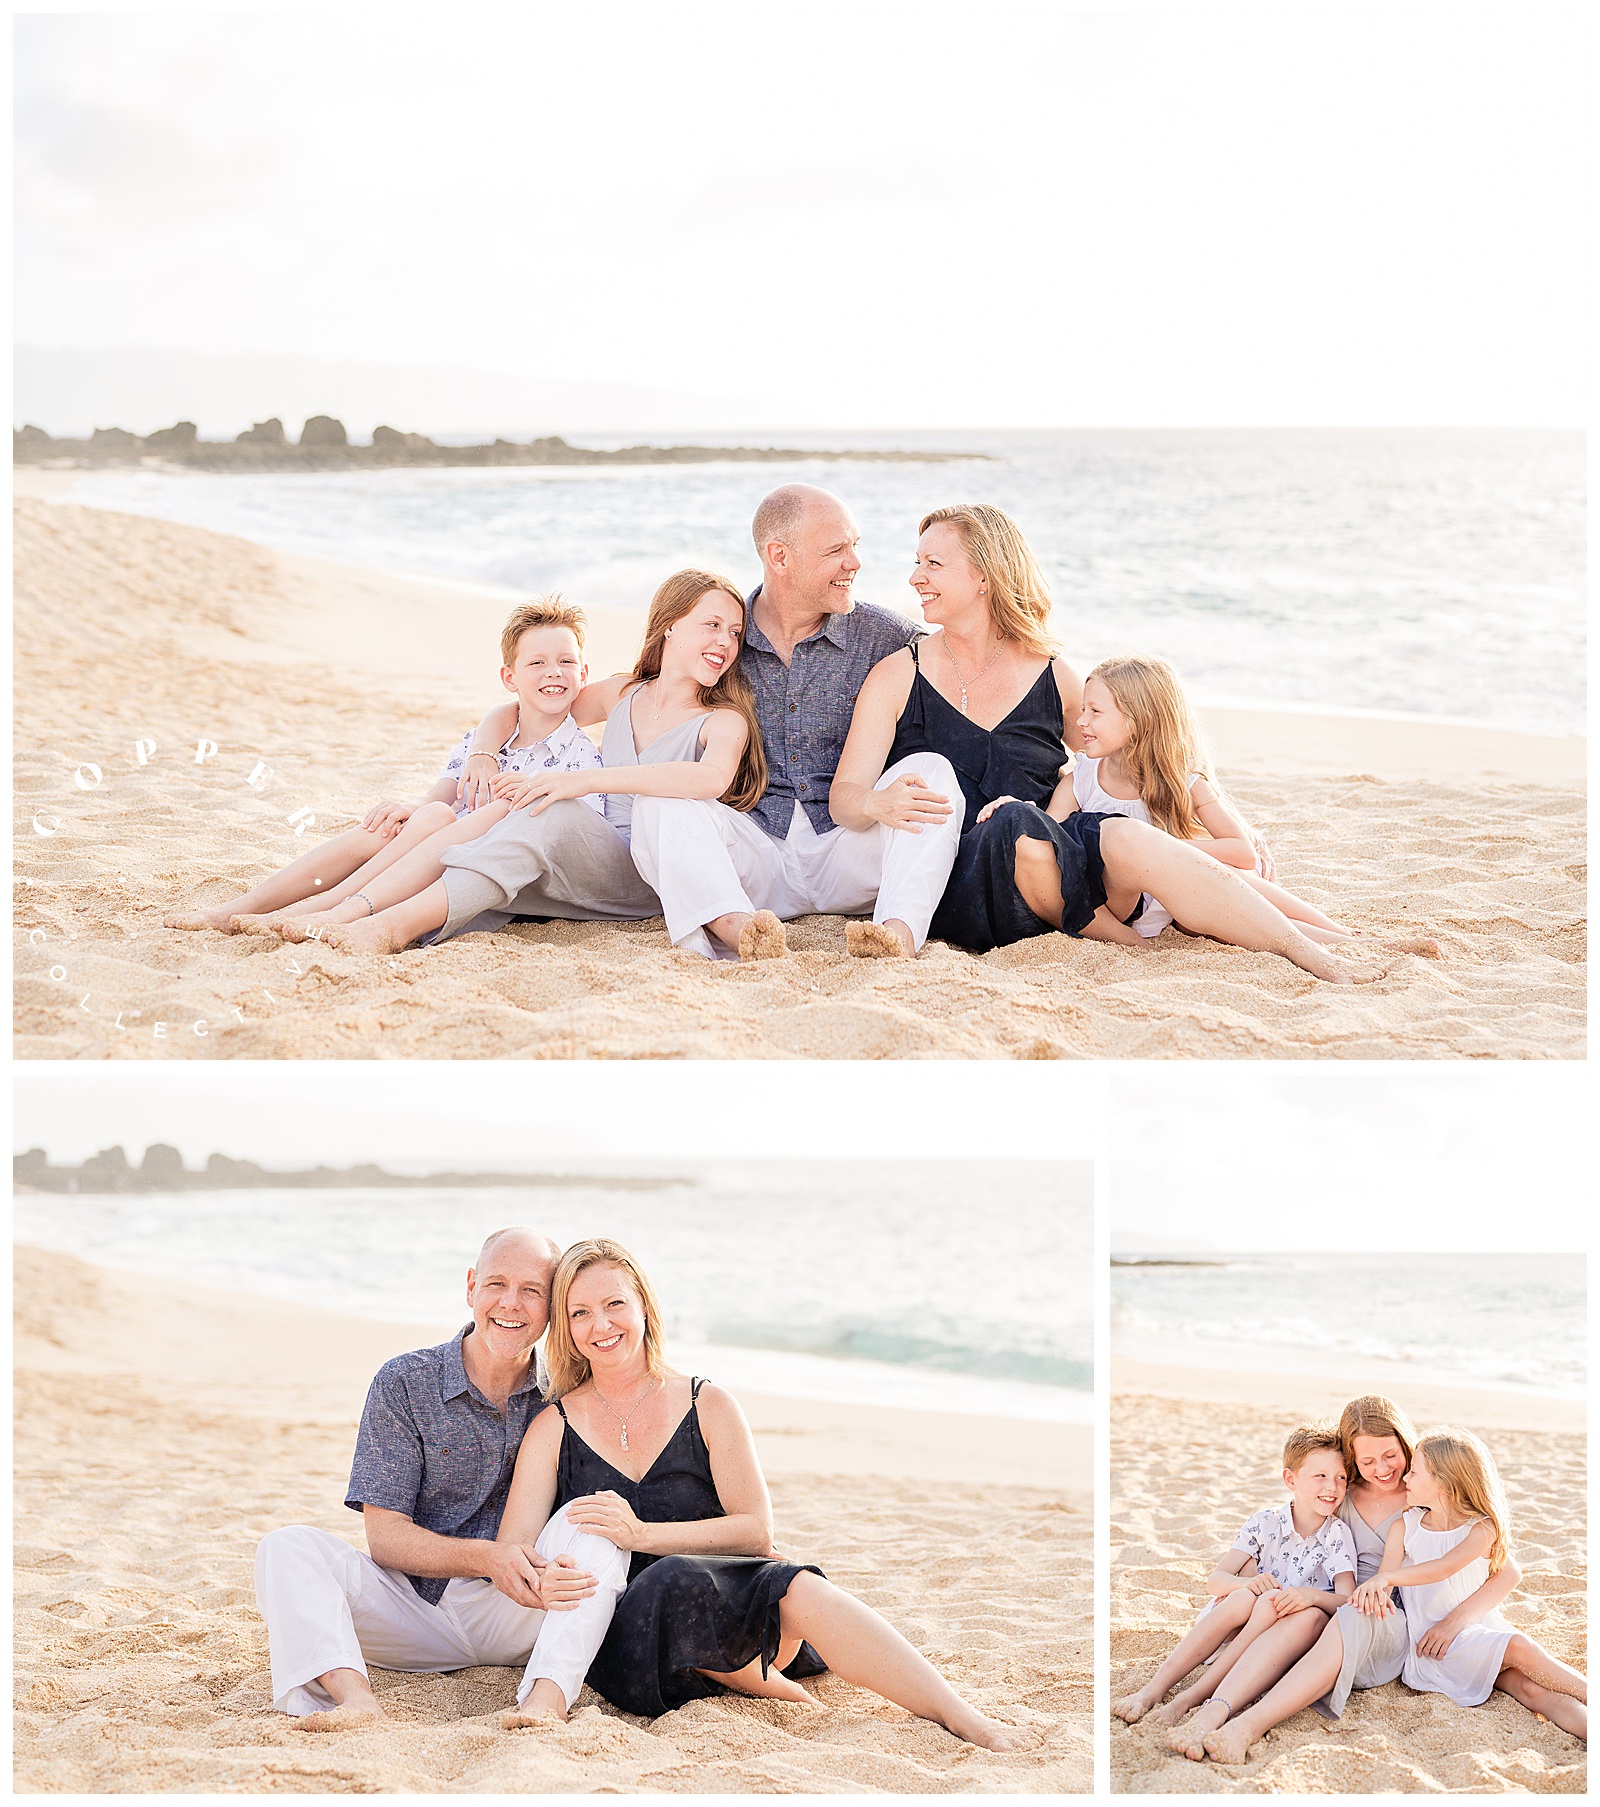 Big family cuddling on the beach in Hawaii